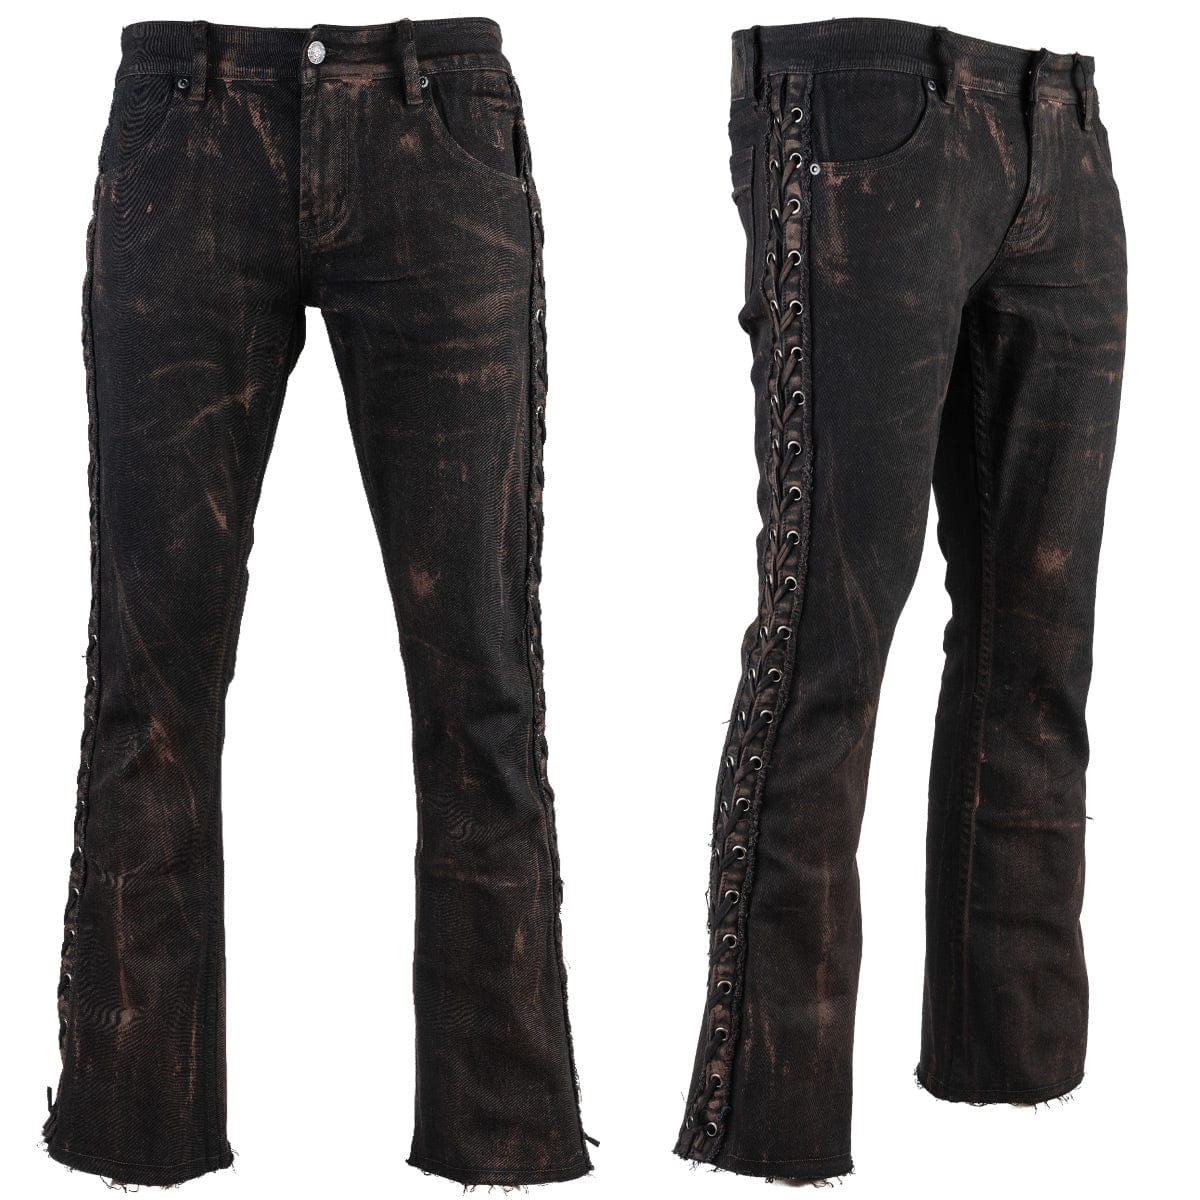 Custom Chop Shop Pants Wornstar Custom Jeans - Raw Umber Alloy Washed Side Laced